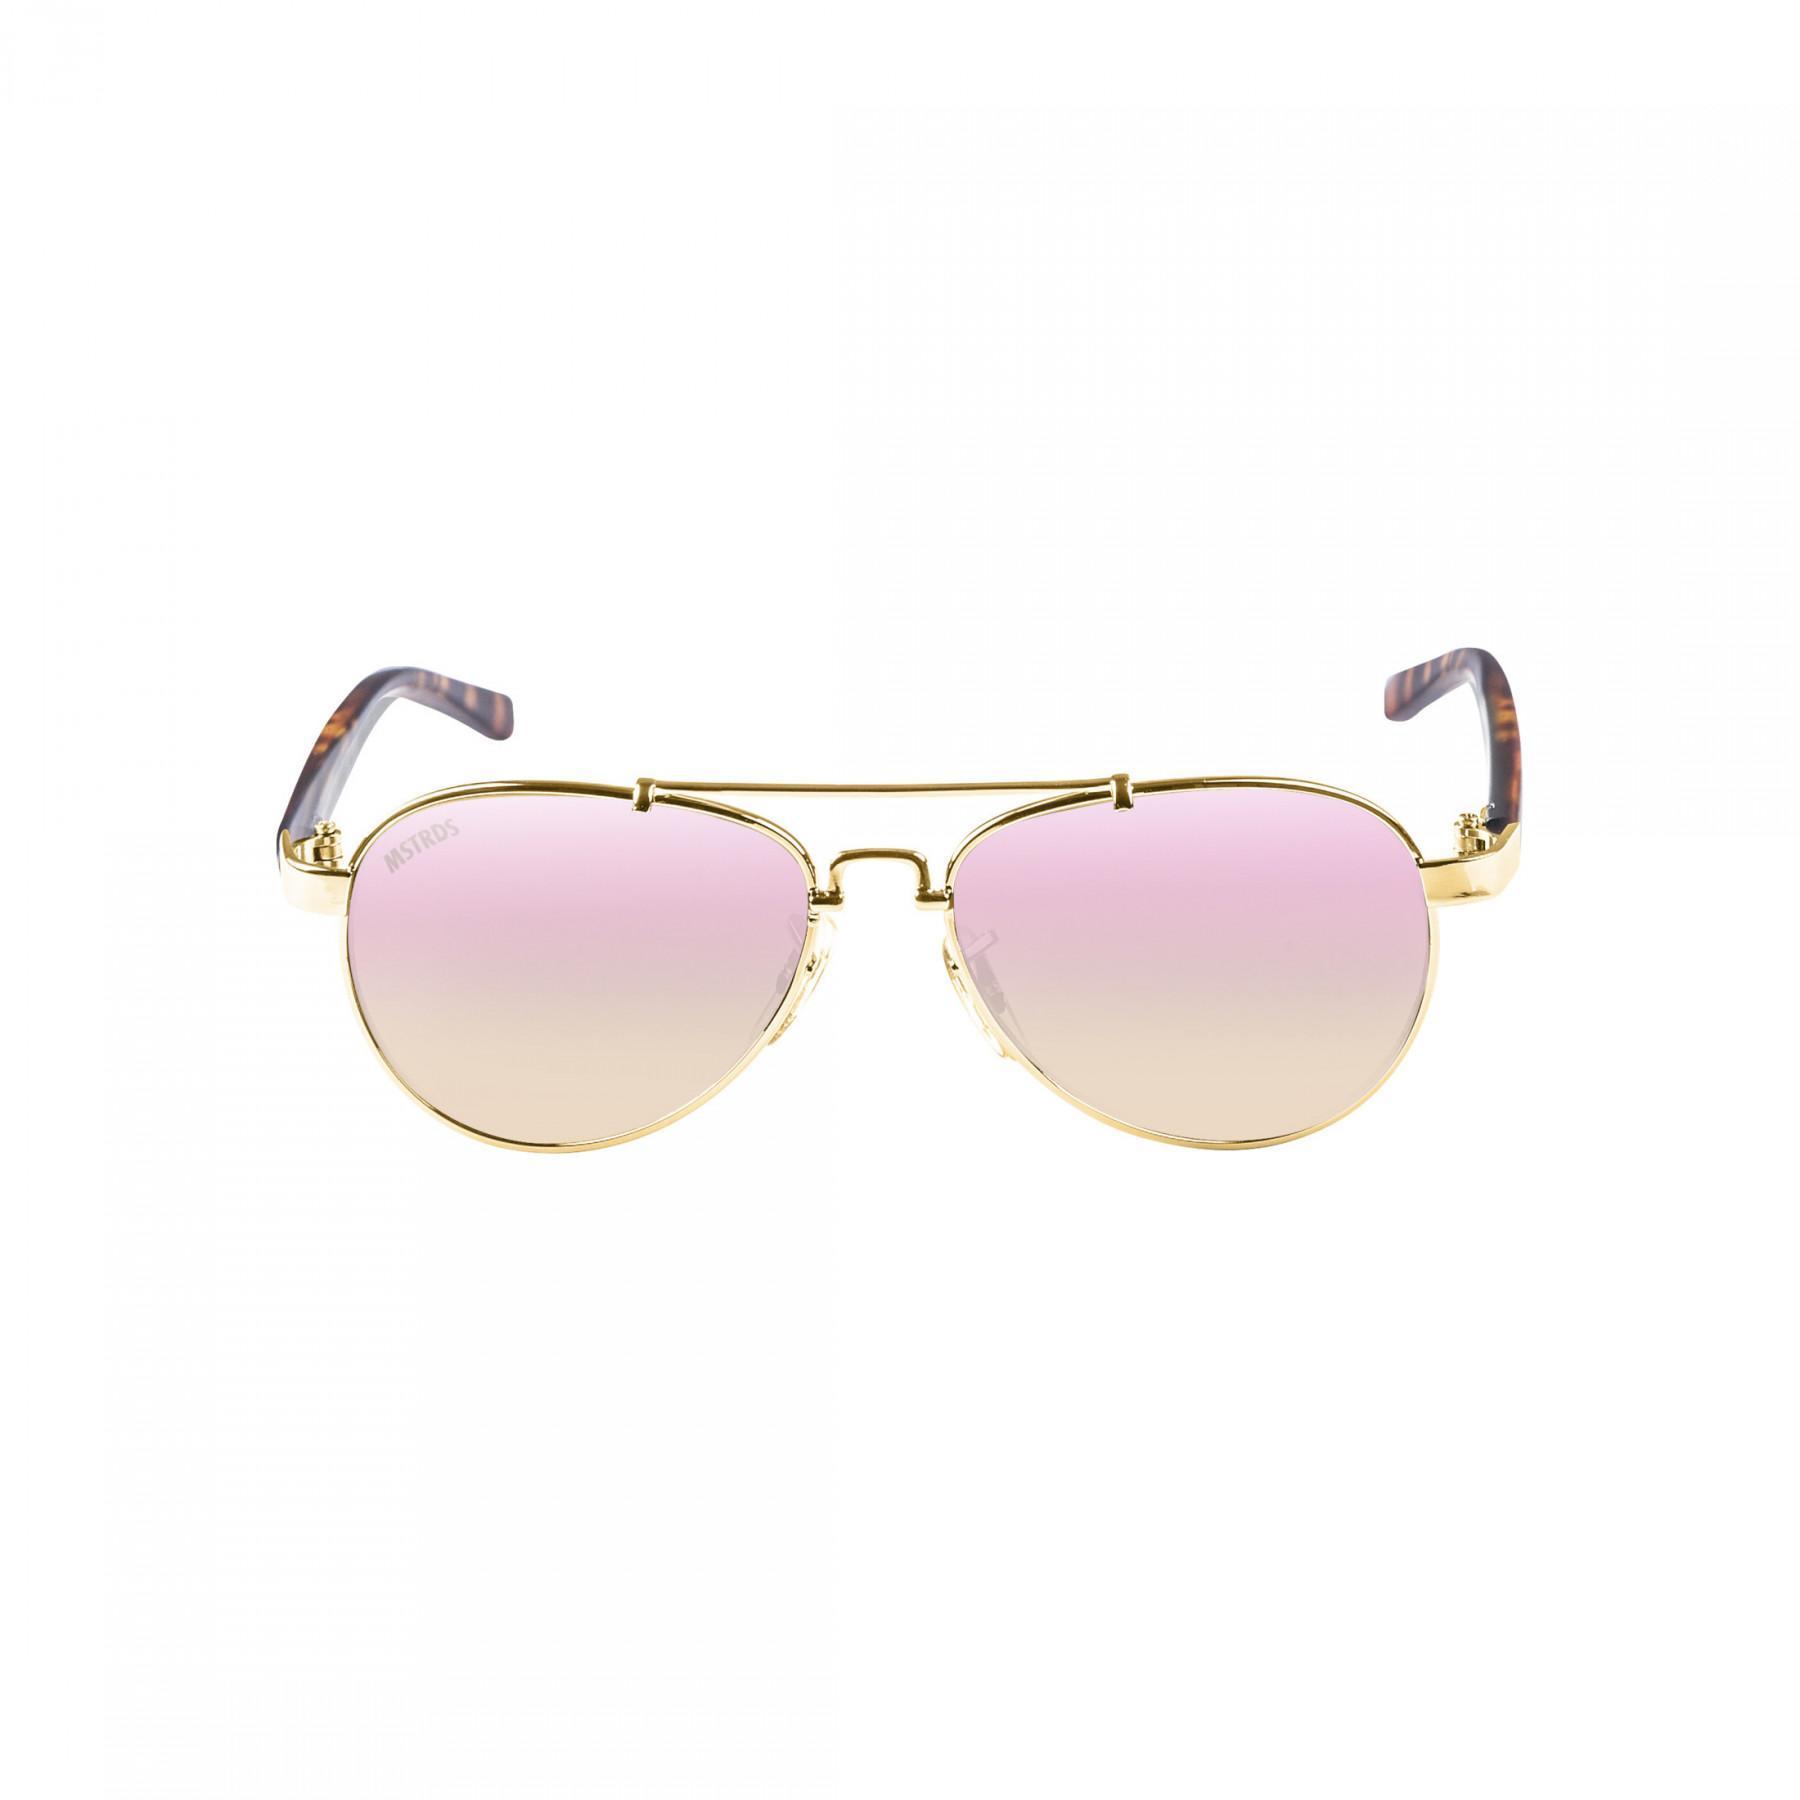 Sonnenbrille Masterdis mumbo Accessoires - - Mode-Accessoires youth - Sonnenbrillen